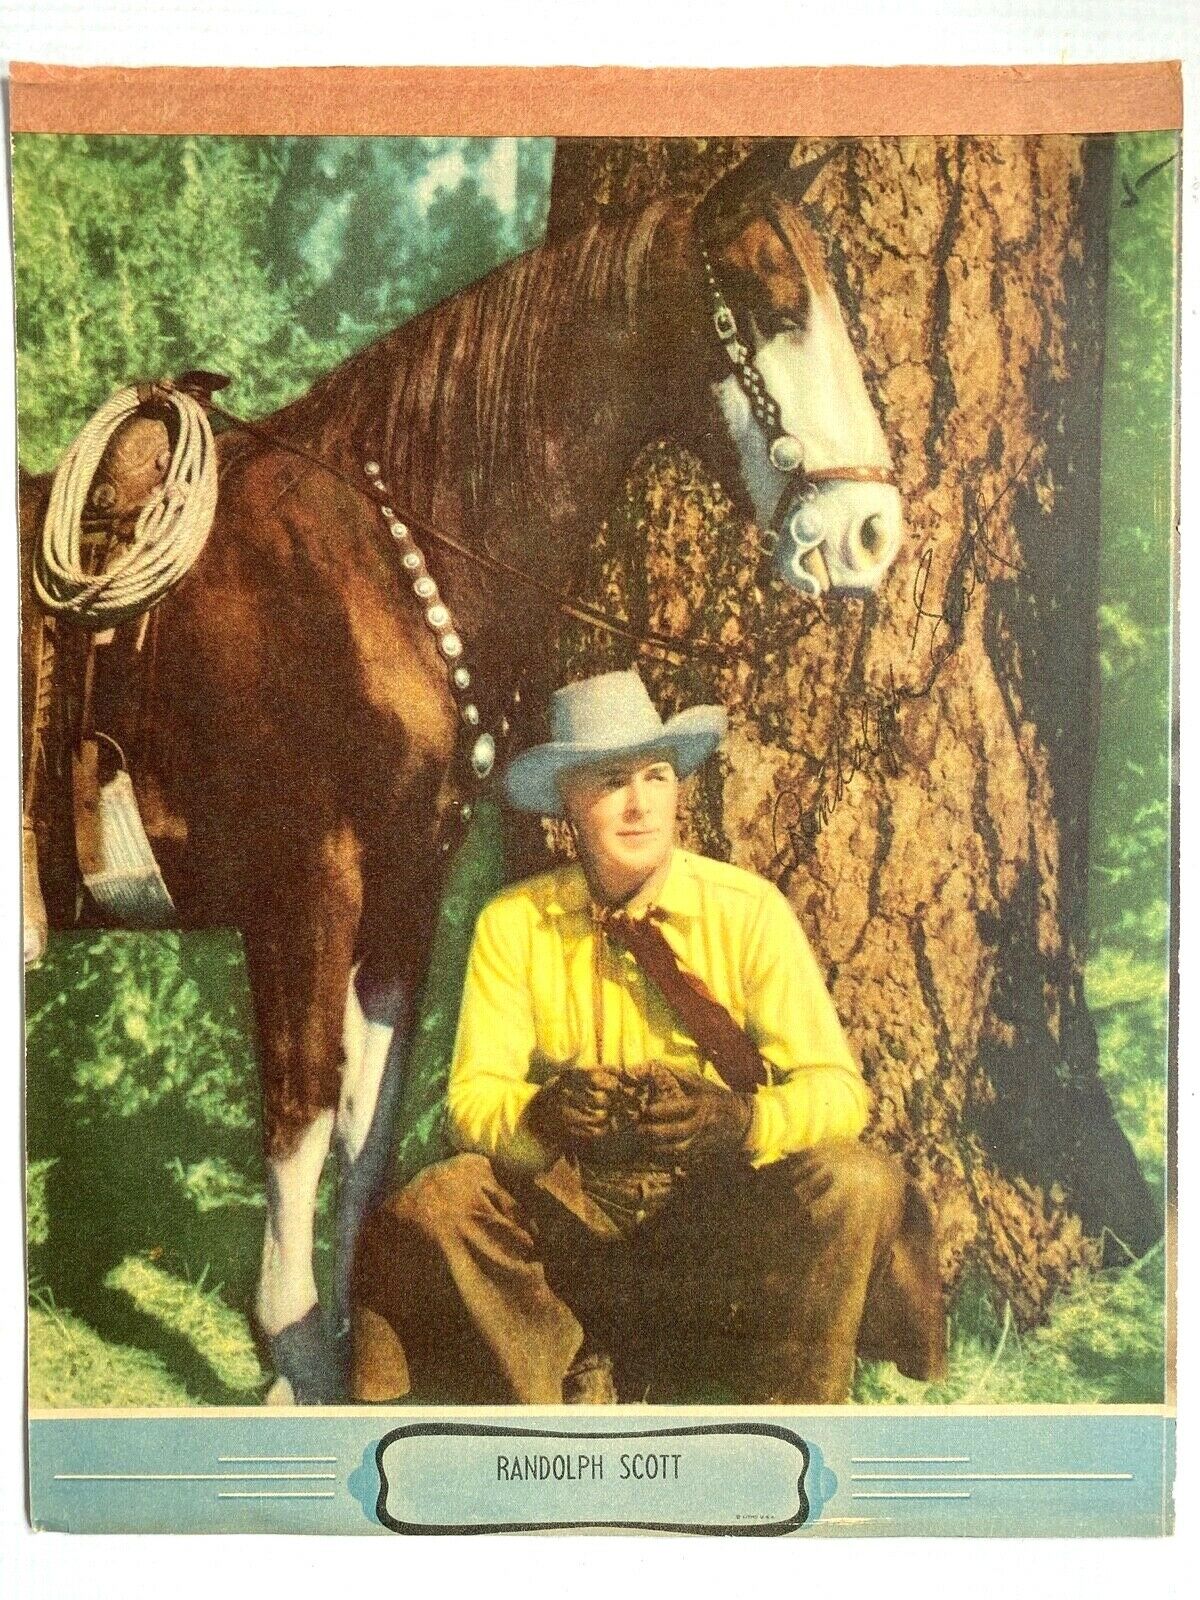 1930s RANDOLPH SCOTT Hollywood Western Actor COLOR PUBLICITY PRINT Cowboy, Horse